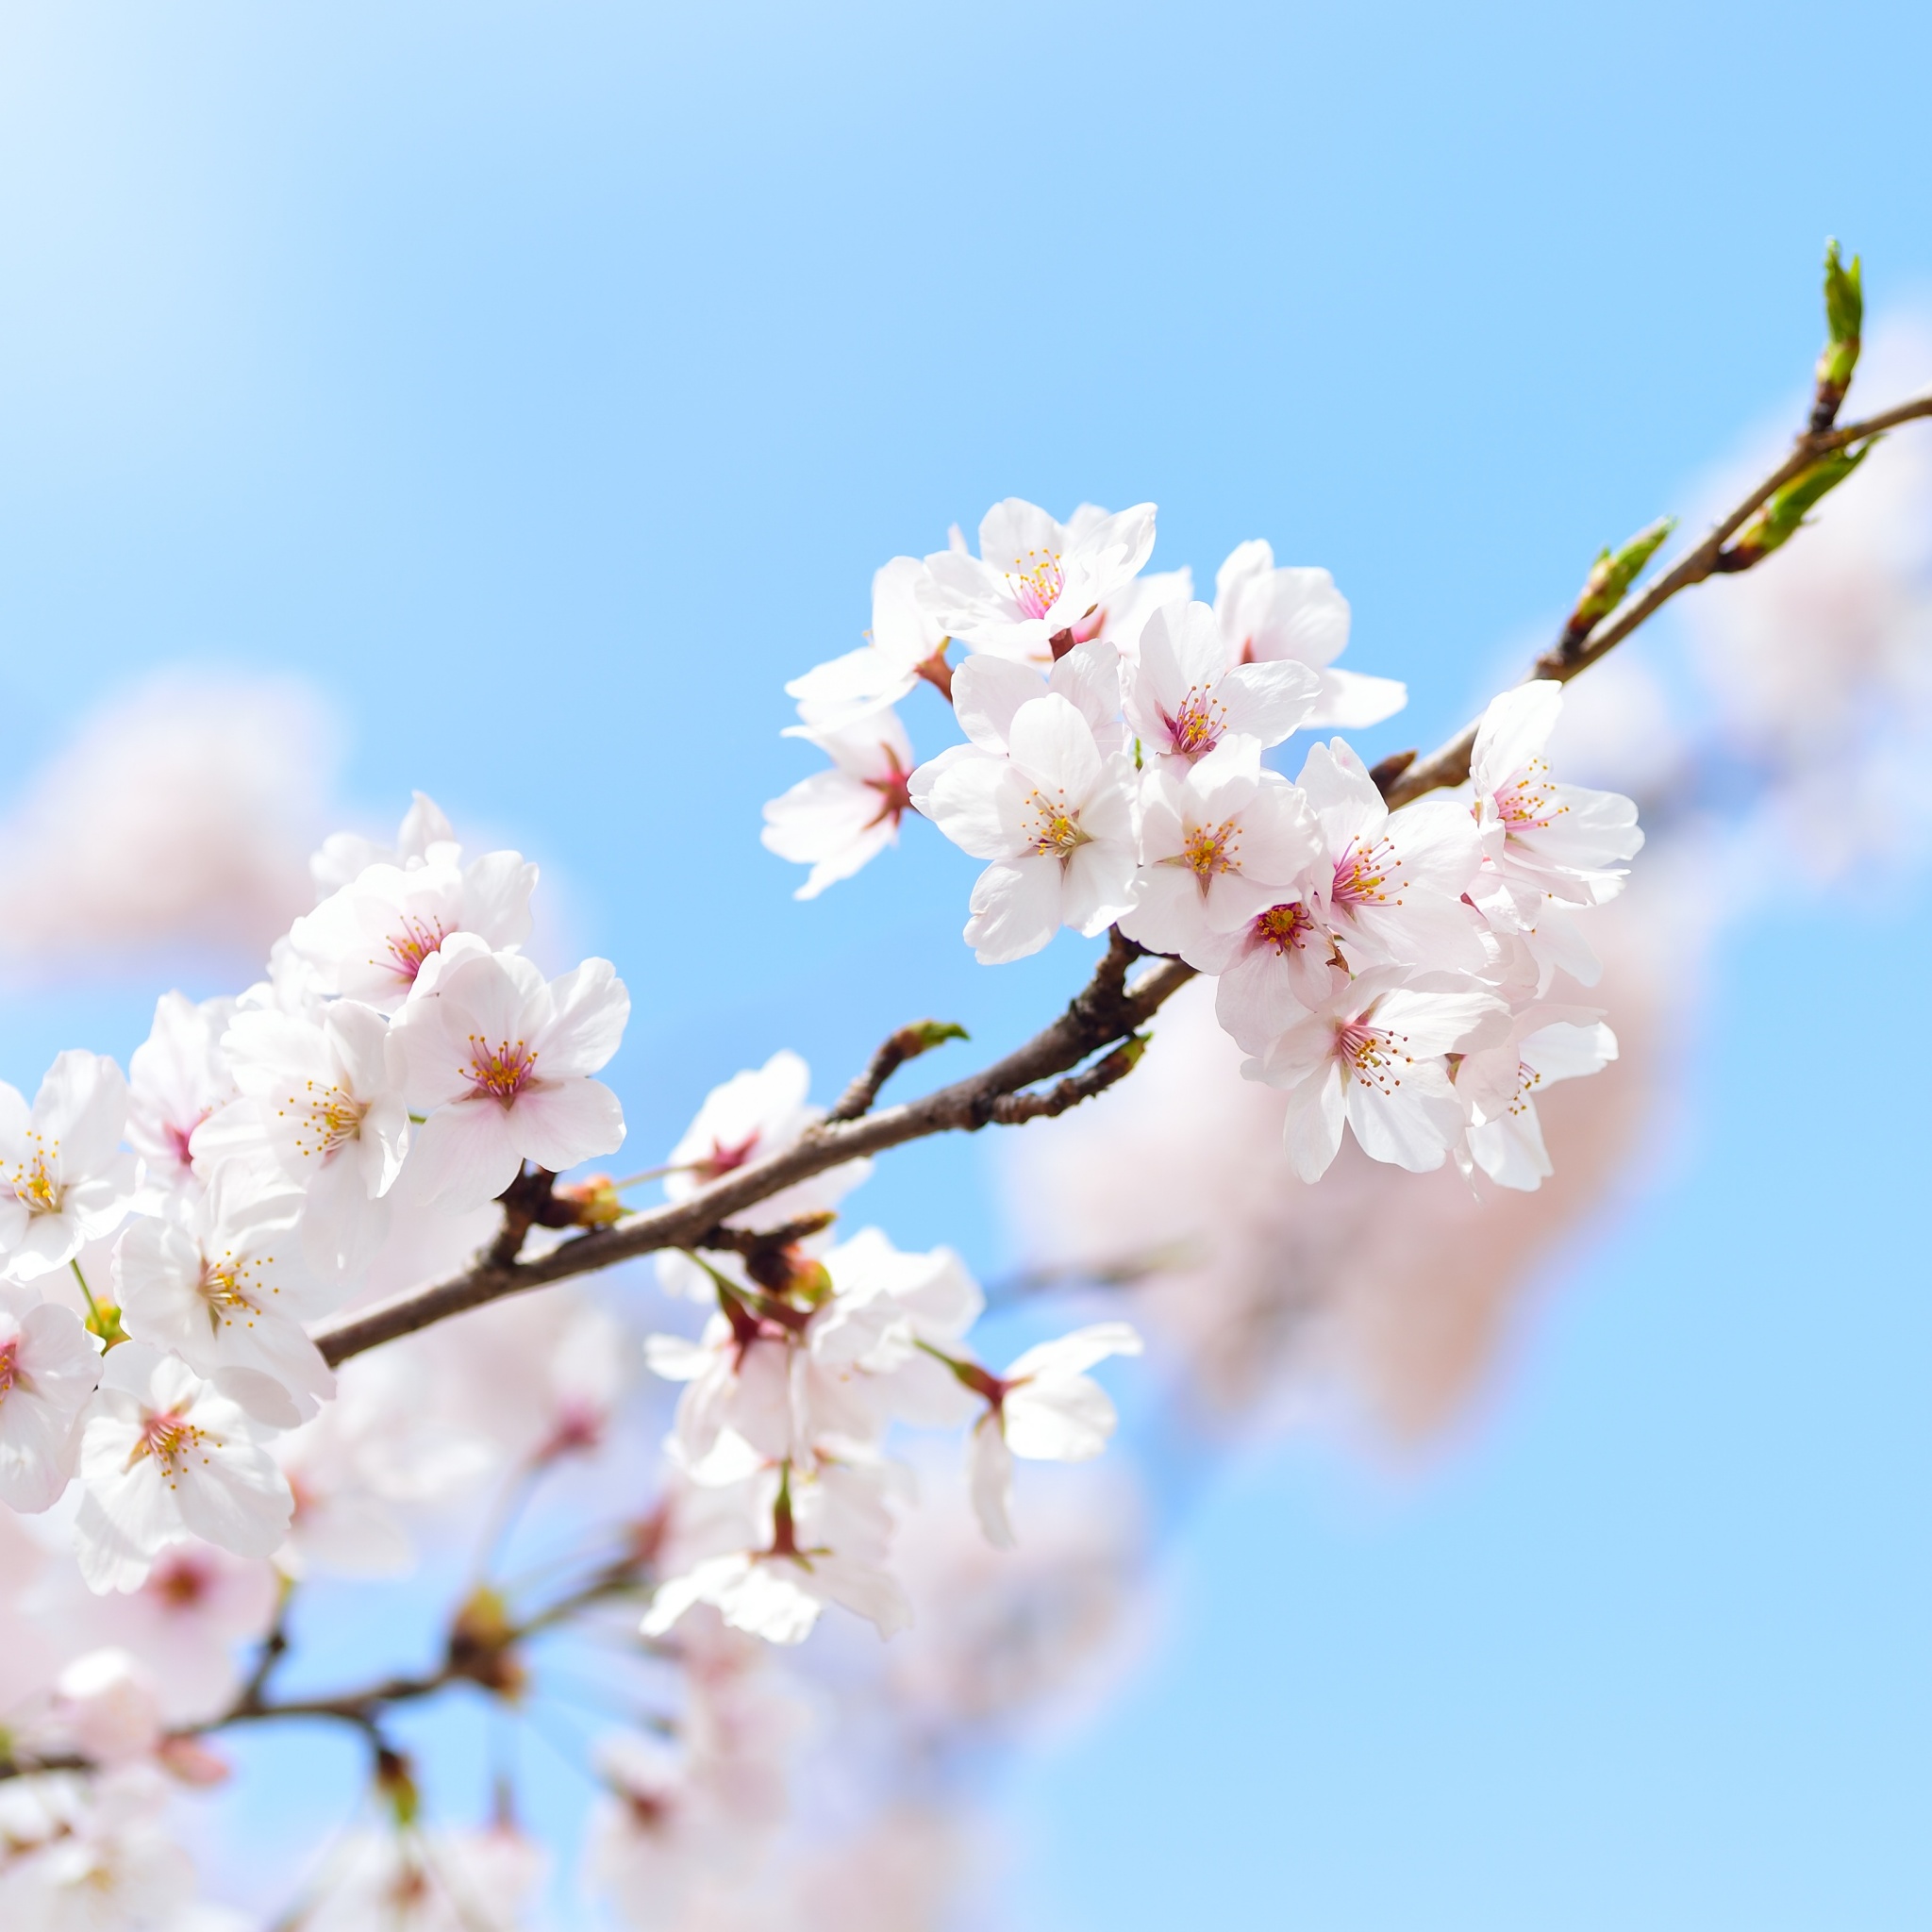 White Cherry Blossom Under Blue Sky  Free Stock Photo